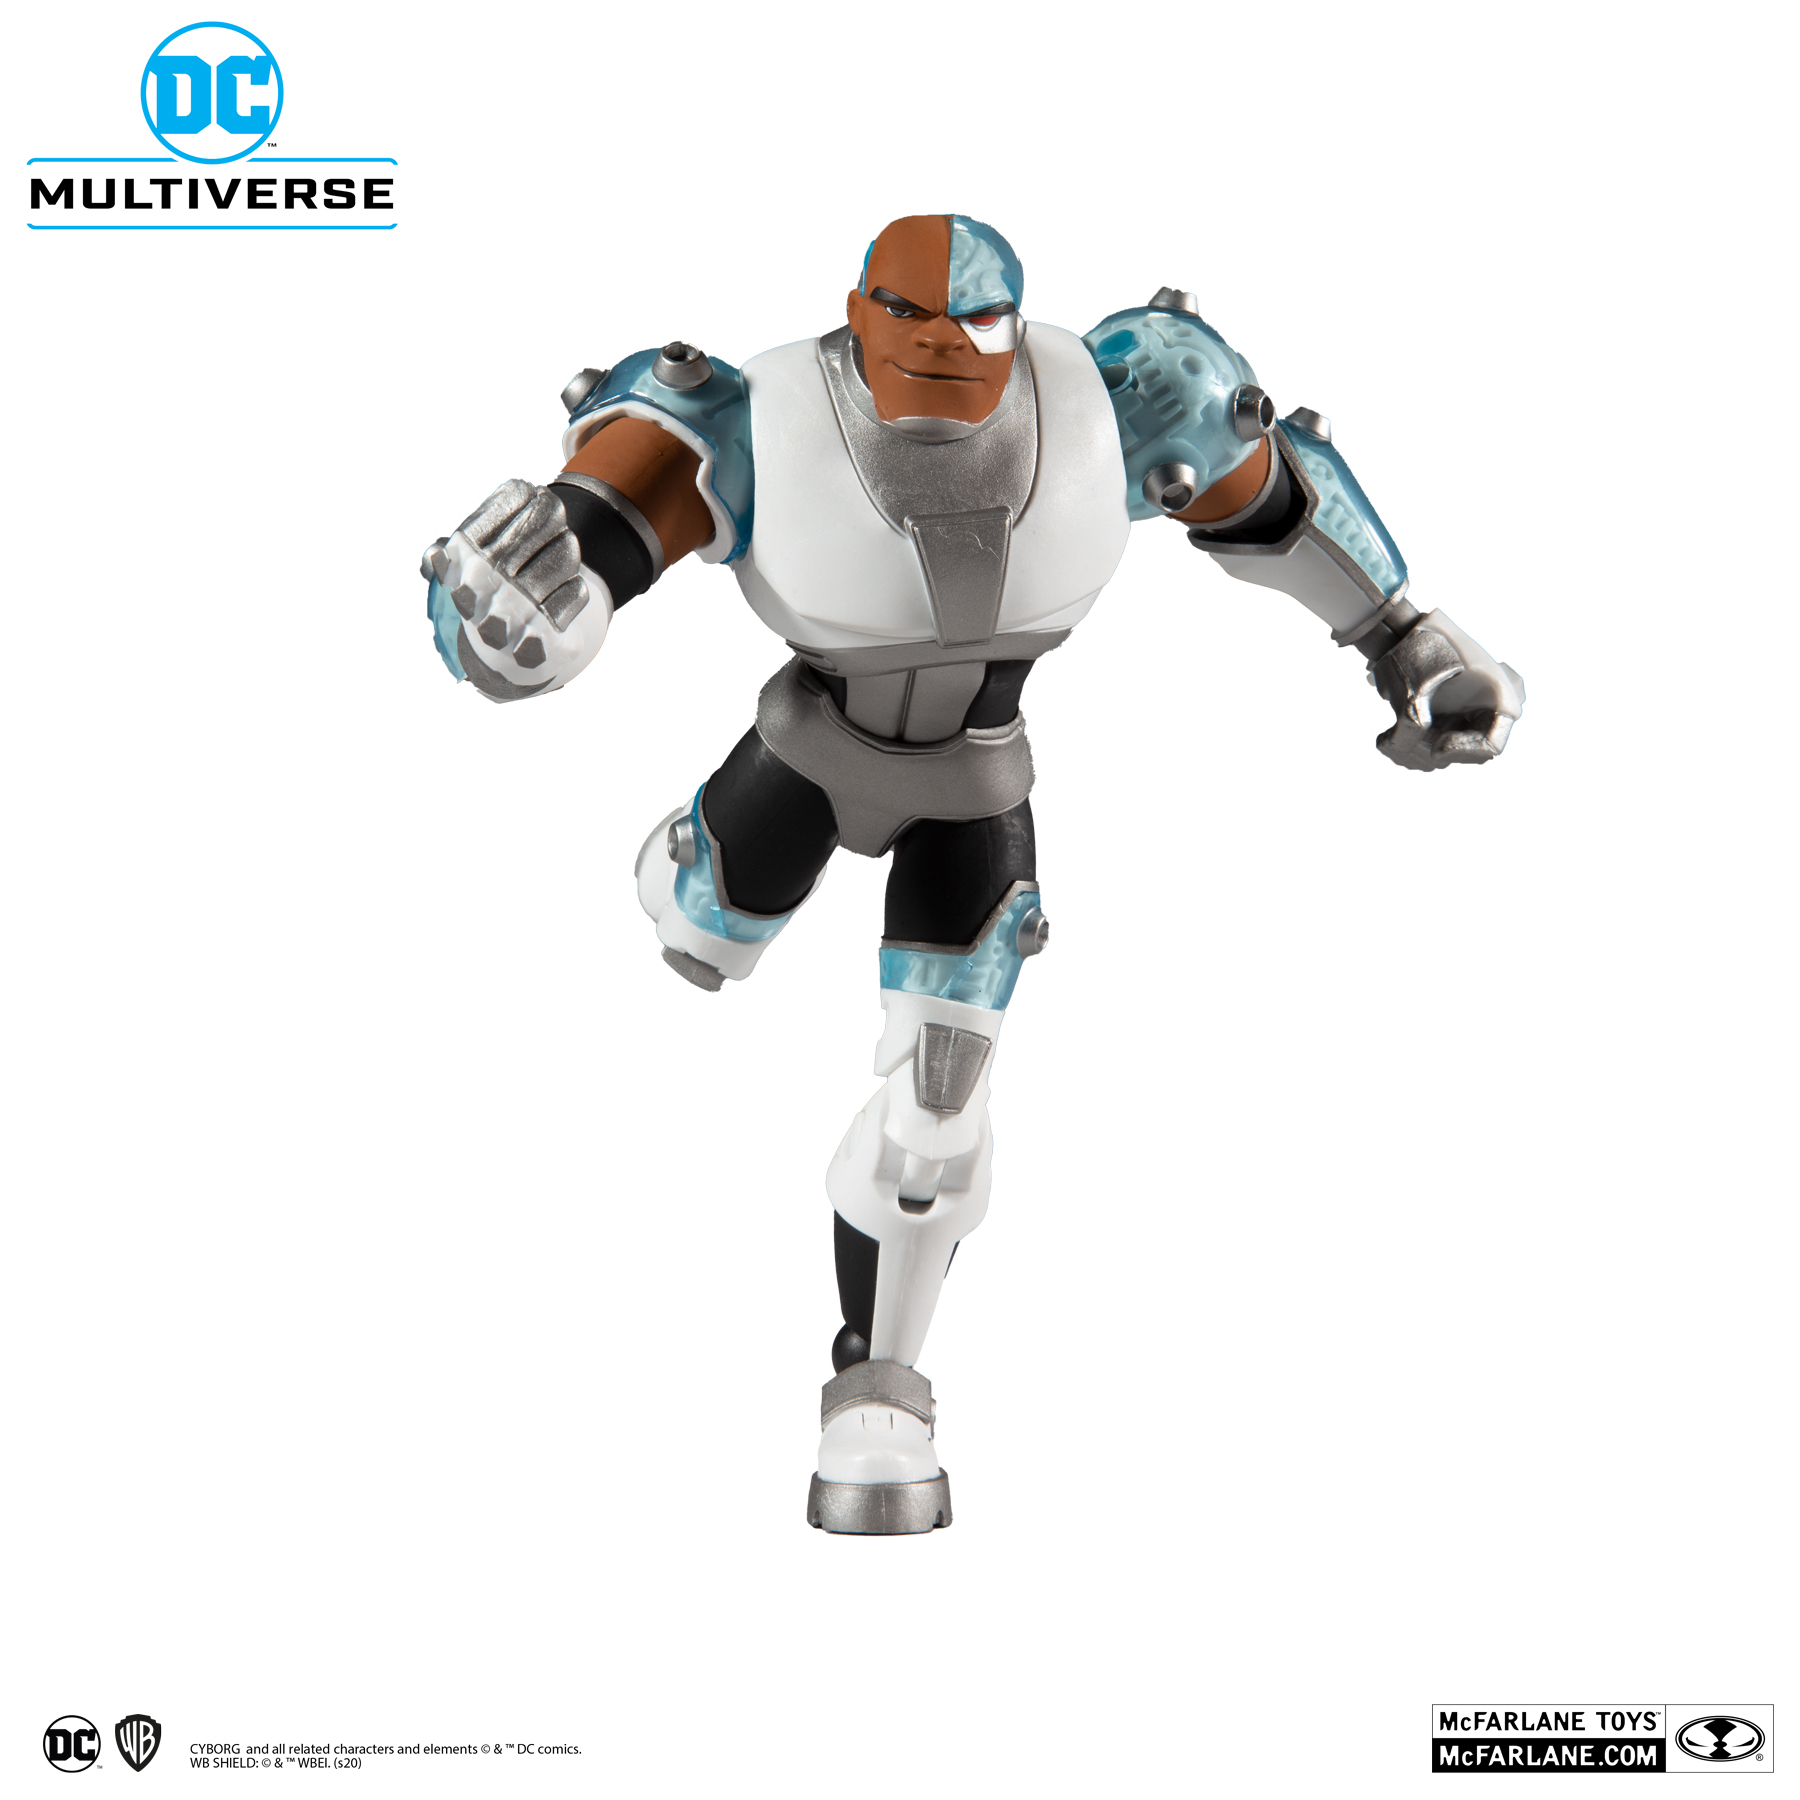 McFarlane-Toys-DC-Multiverse-Cyborg-Promo-06.jpg